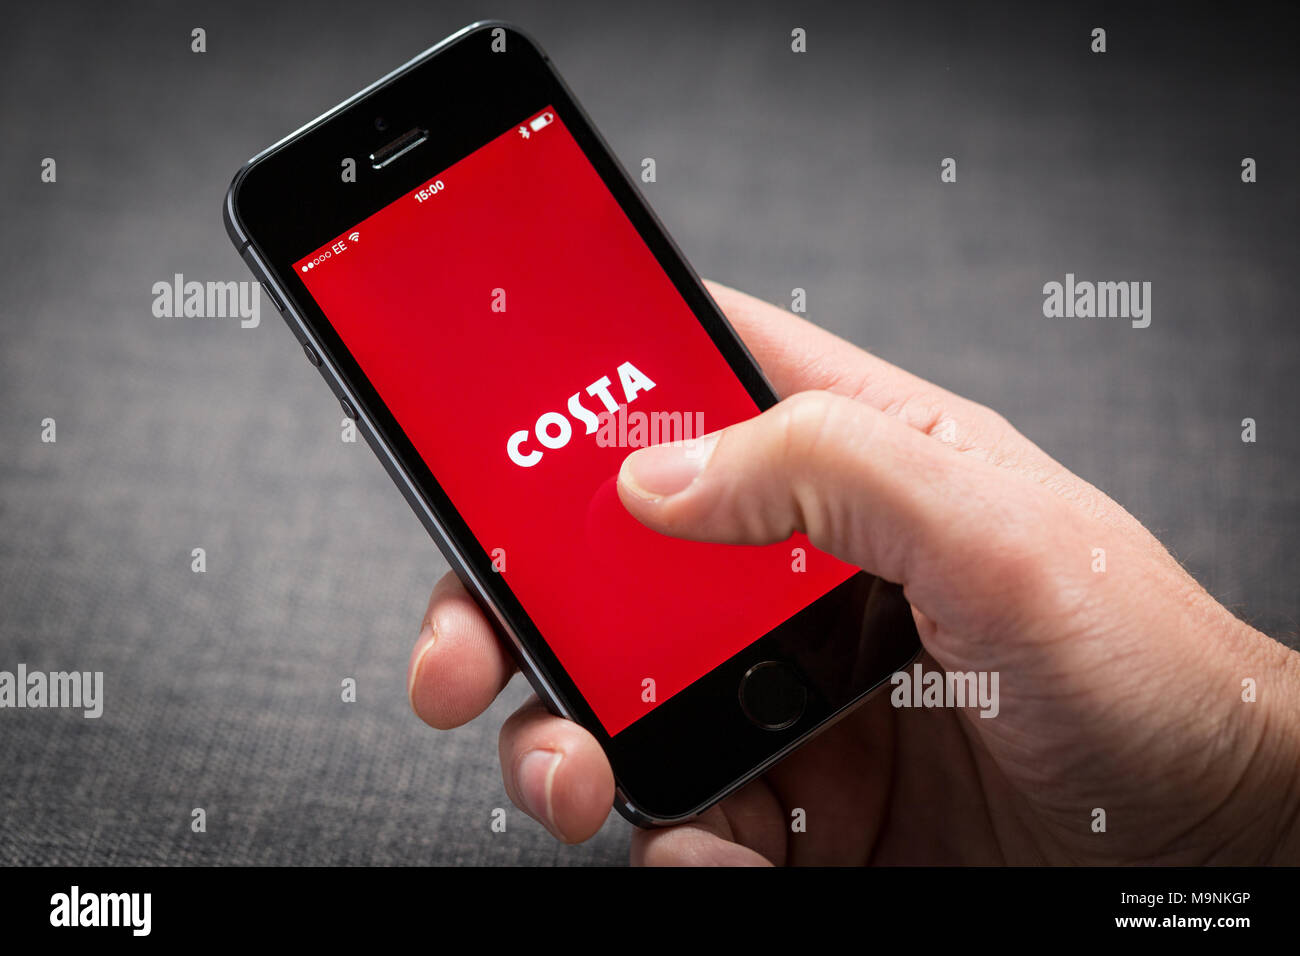 Costa Coffee app on an iPhone Stock Photo